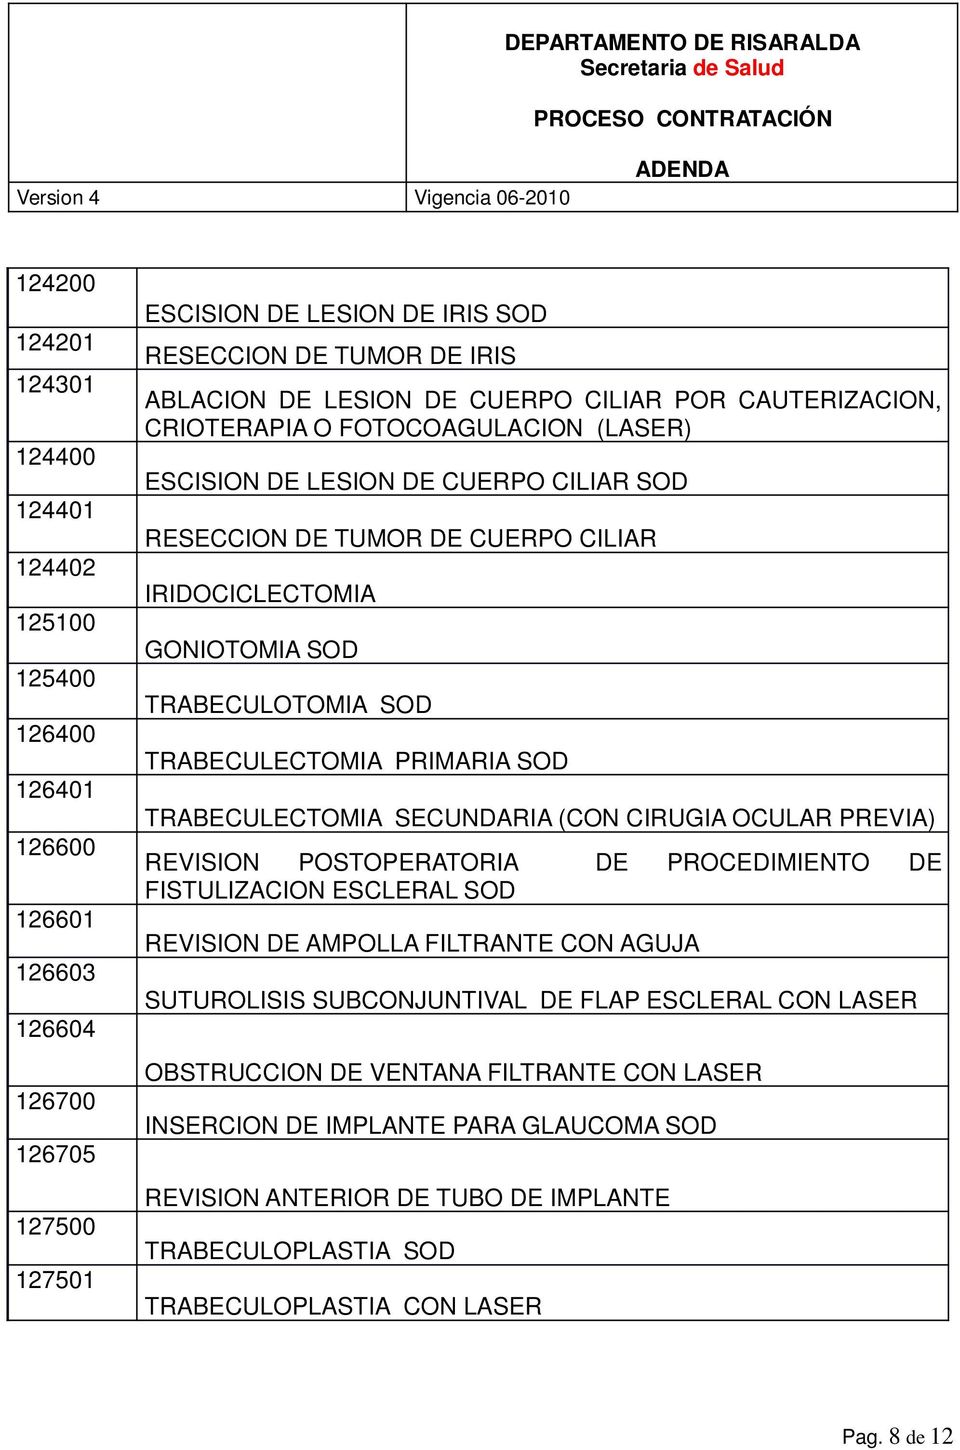 TRABECULECTOMIA PRIMARIA TRABECULECTOMIA SECUNDARIA (CON CIRUGIA OCULAR PREVIA) REVISION POSTOPERATORIA FISTULIZACION ESCLERAL REVISION DE AMPOLLA FILTRANTE CON AGUJA DE PROCEDIMIENTO DE SUTUROLISIS